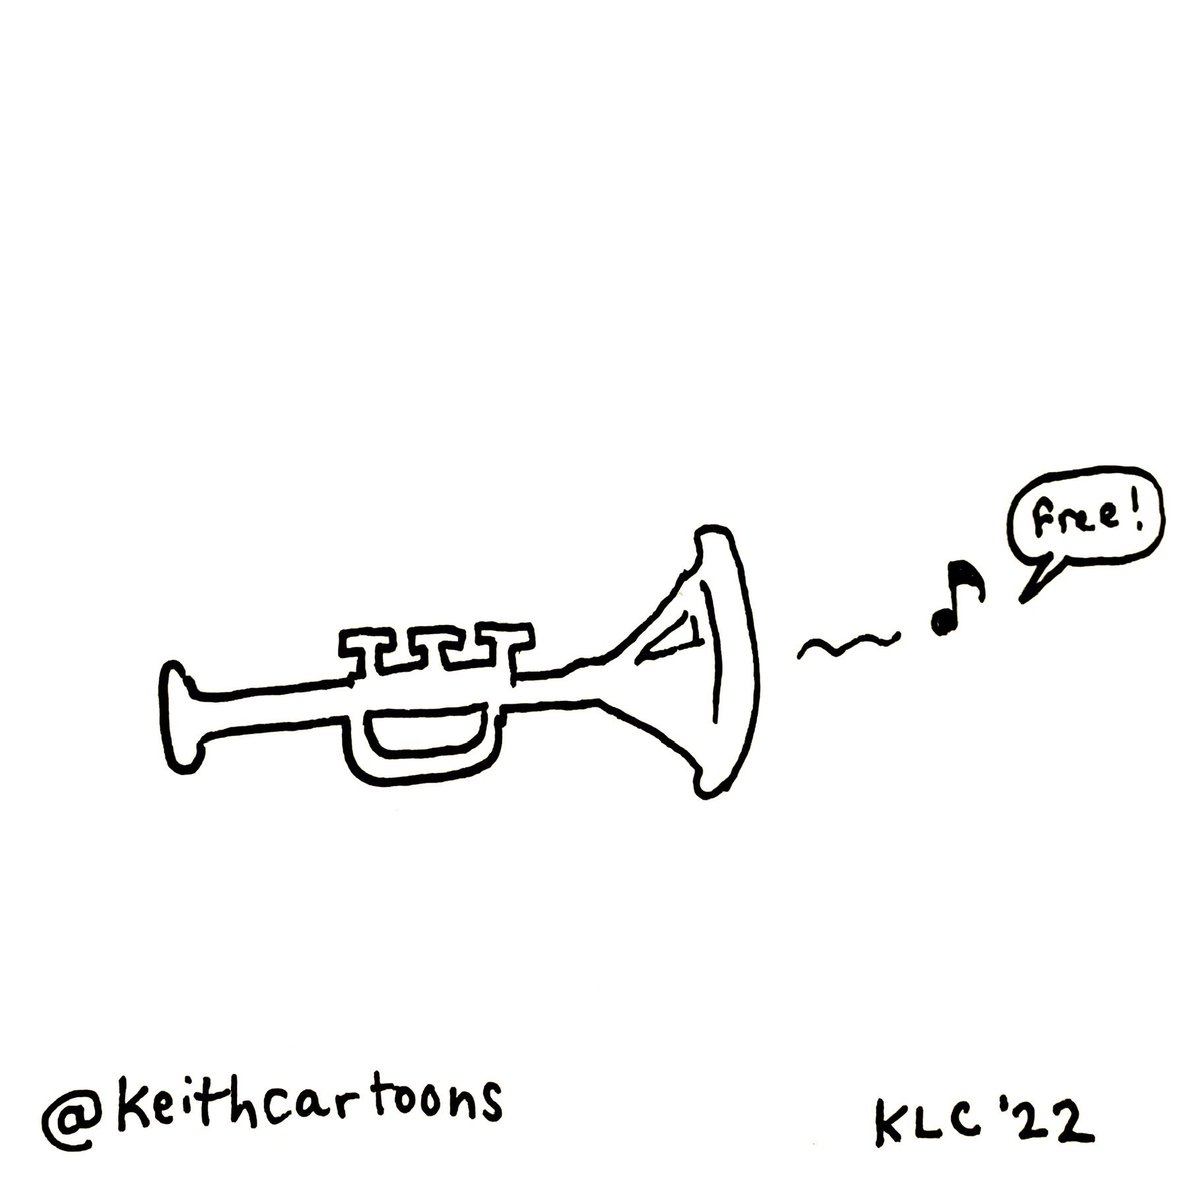 The great escape. #doodle #cartoon #music #musicianhumor #trumpet